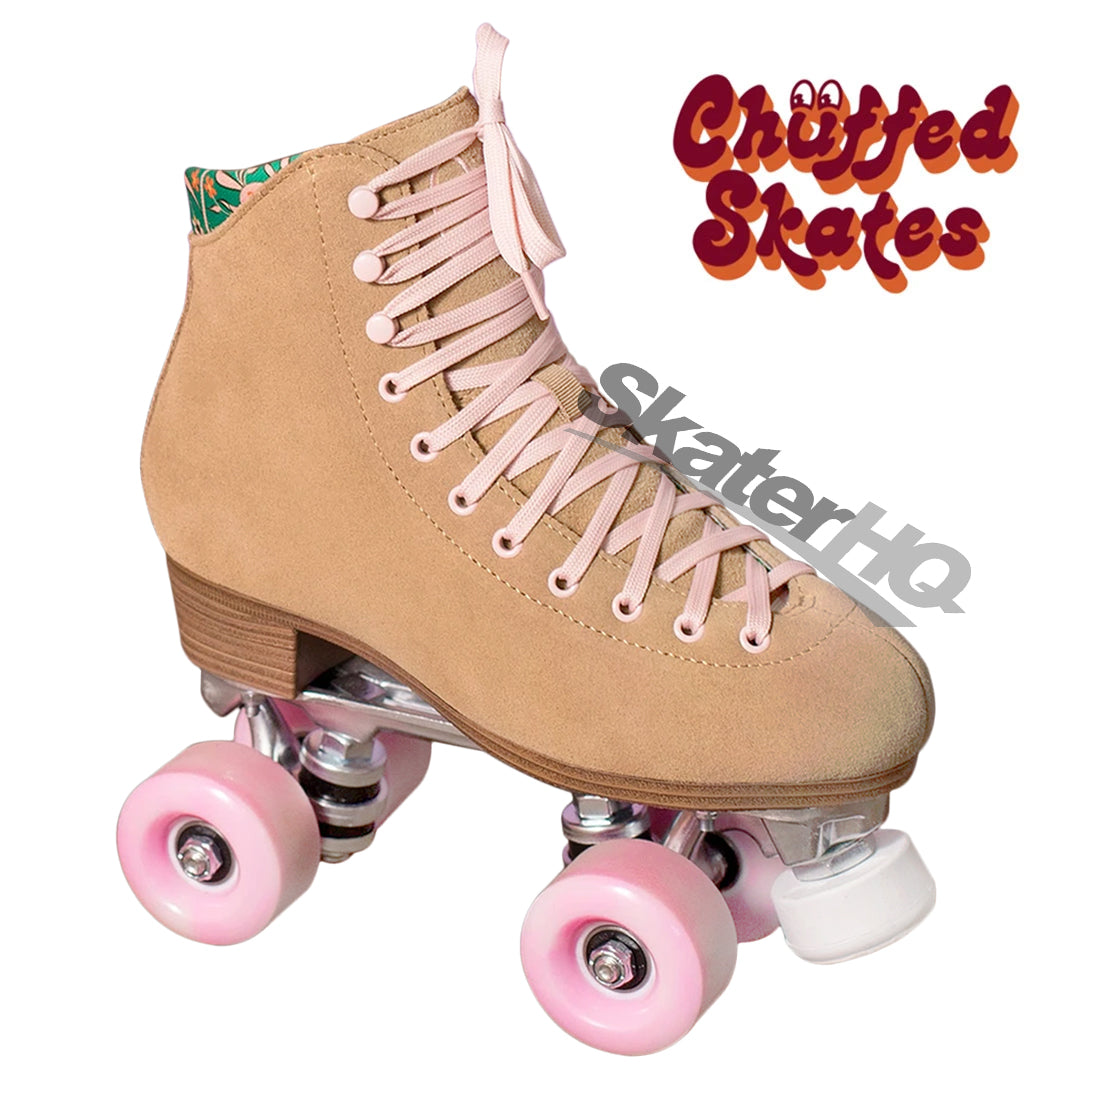 Chuffed Crew Iced Coffee 11US Roller Skates